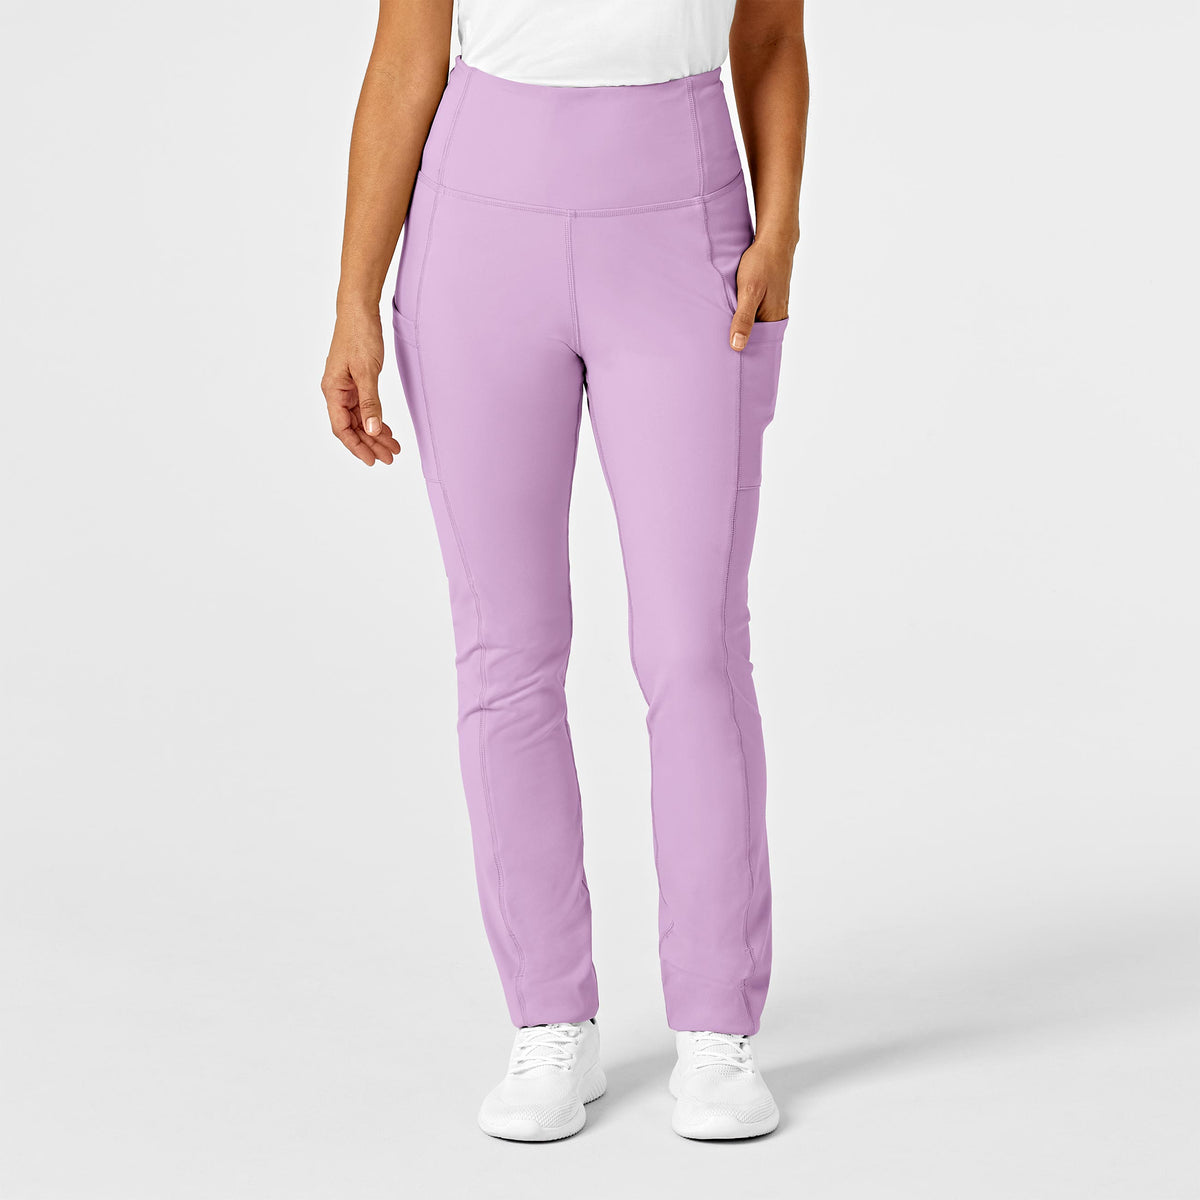 Jaanuu Women’s Rose Trim High-Waist Yoga Pants Purple Lavender Size XL